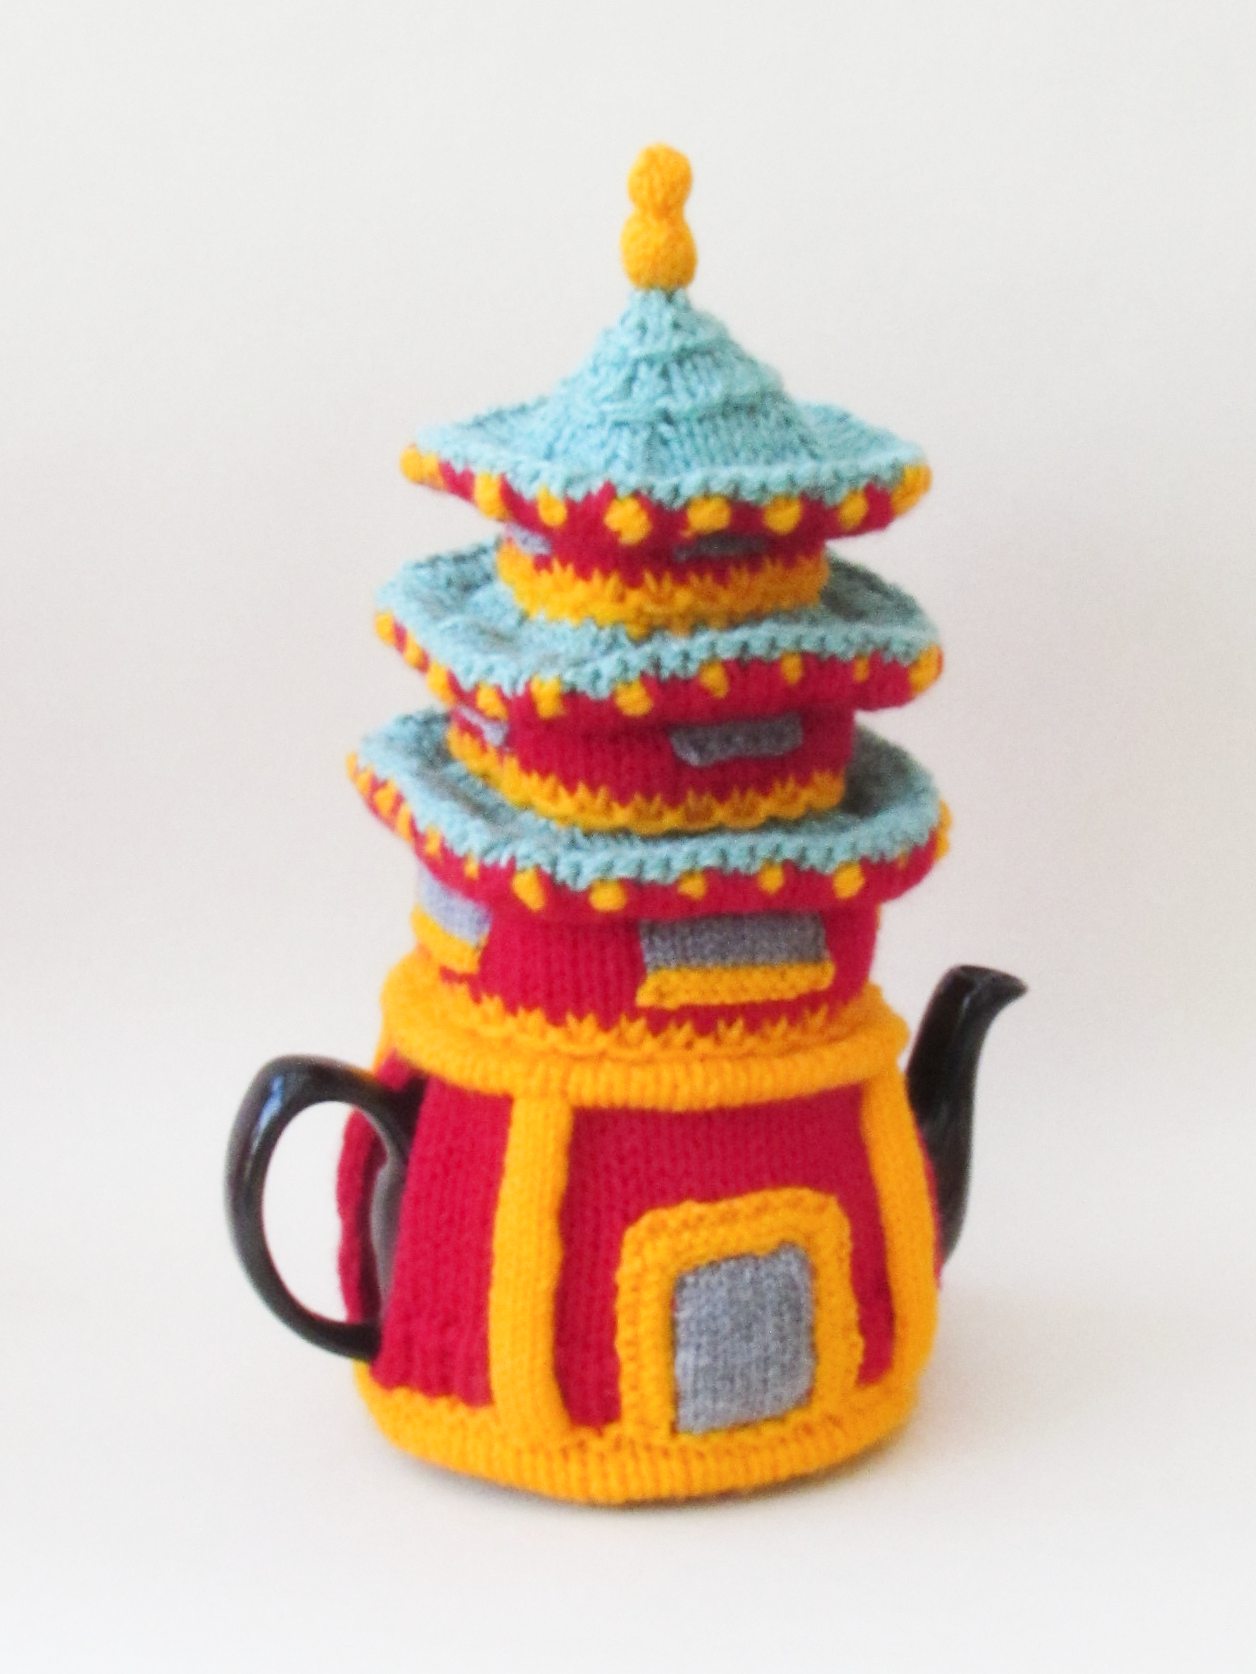 Japanese Pagoda knitting pattern